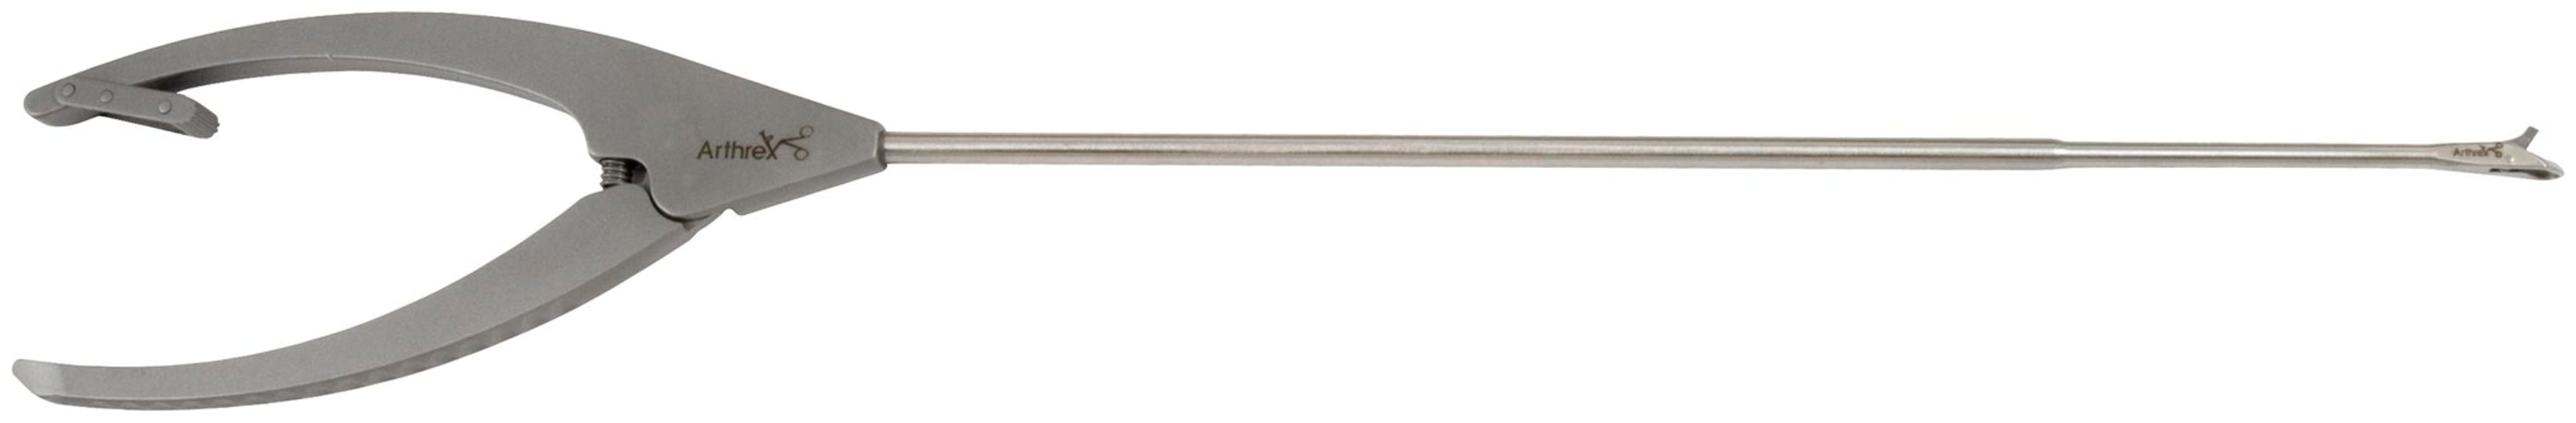 Punch, Medium 45° Left Tip, ø3.4 mm, 220 mm Straight Shaft w/WishBone Handle